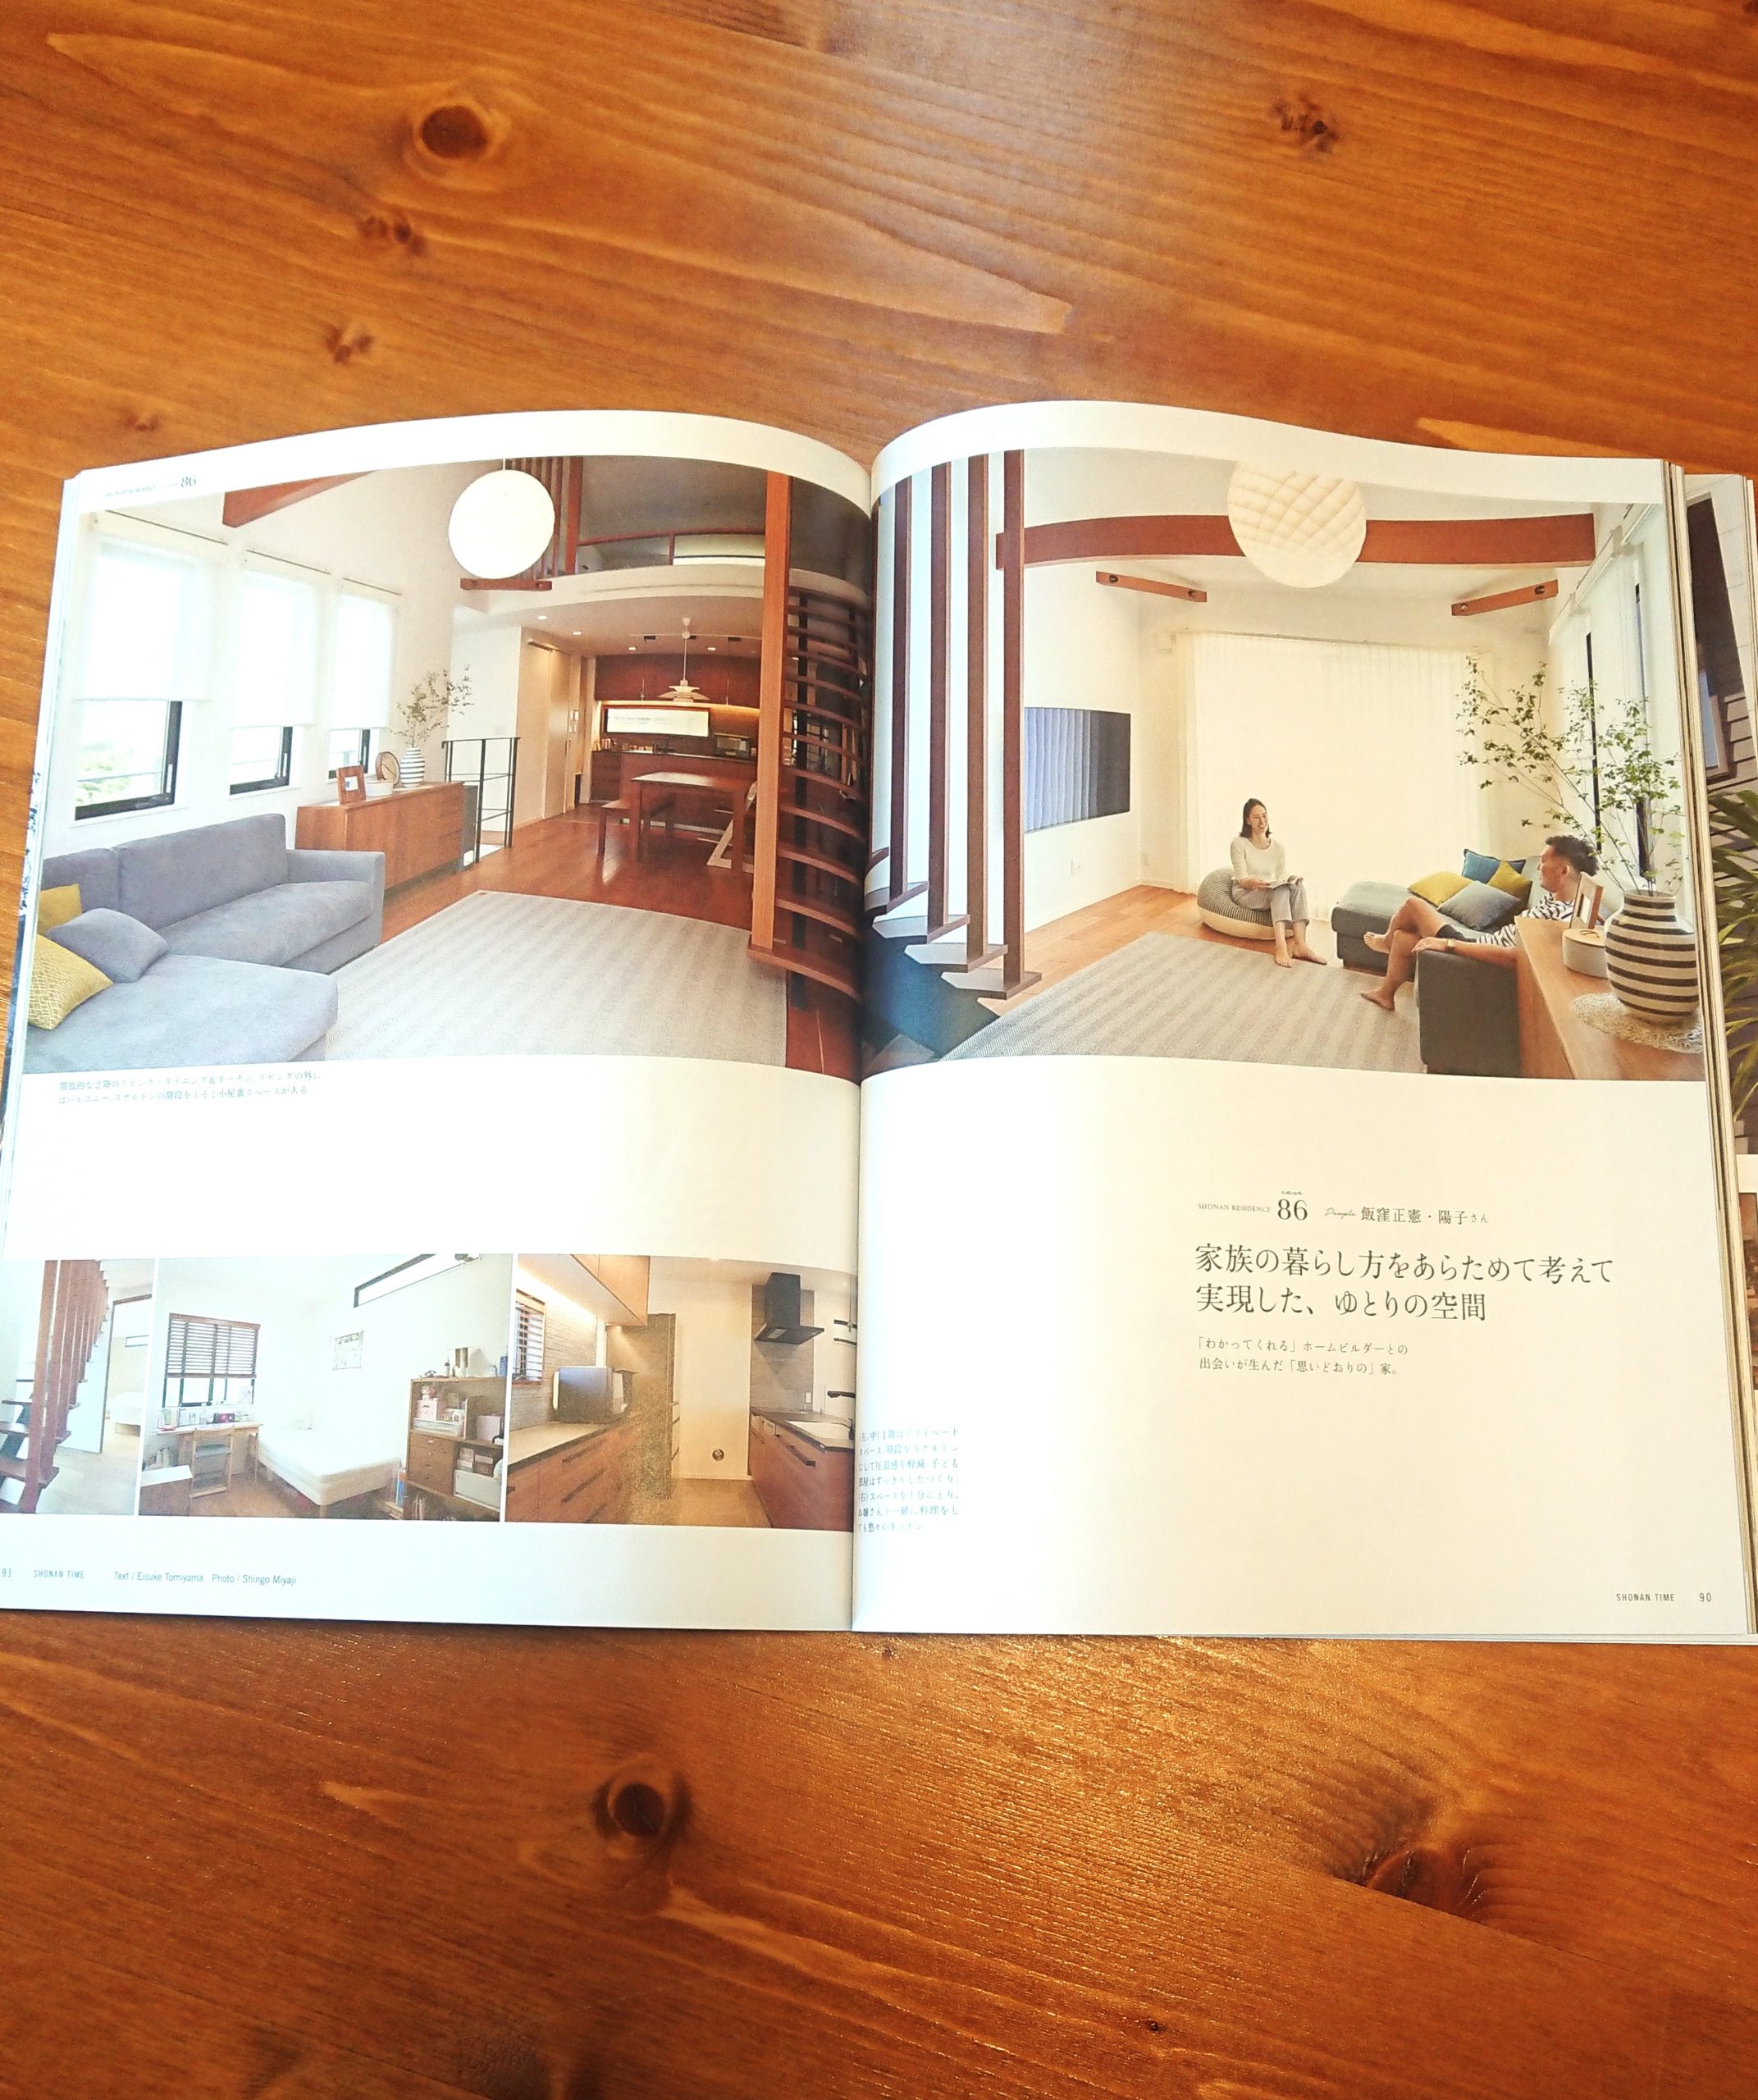 『SHONAN TIME』に弊社でデザイン、施工したお家が掲載されました。